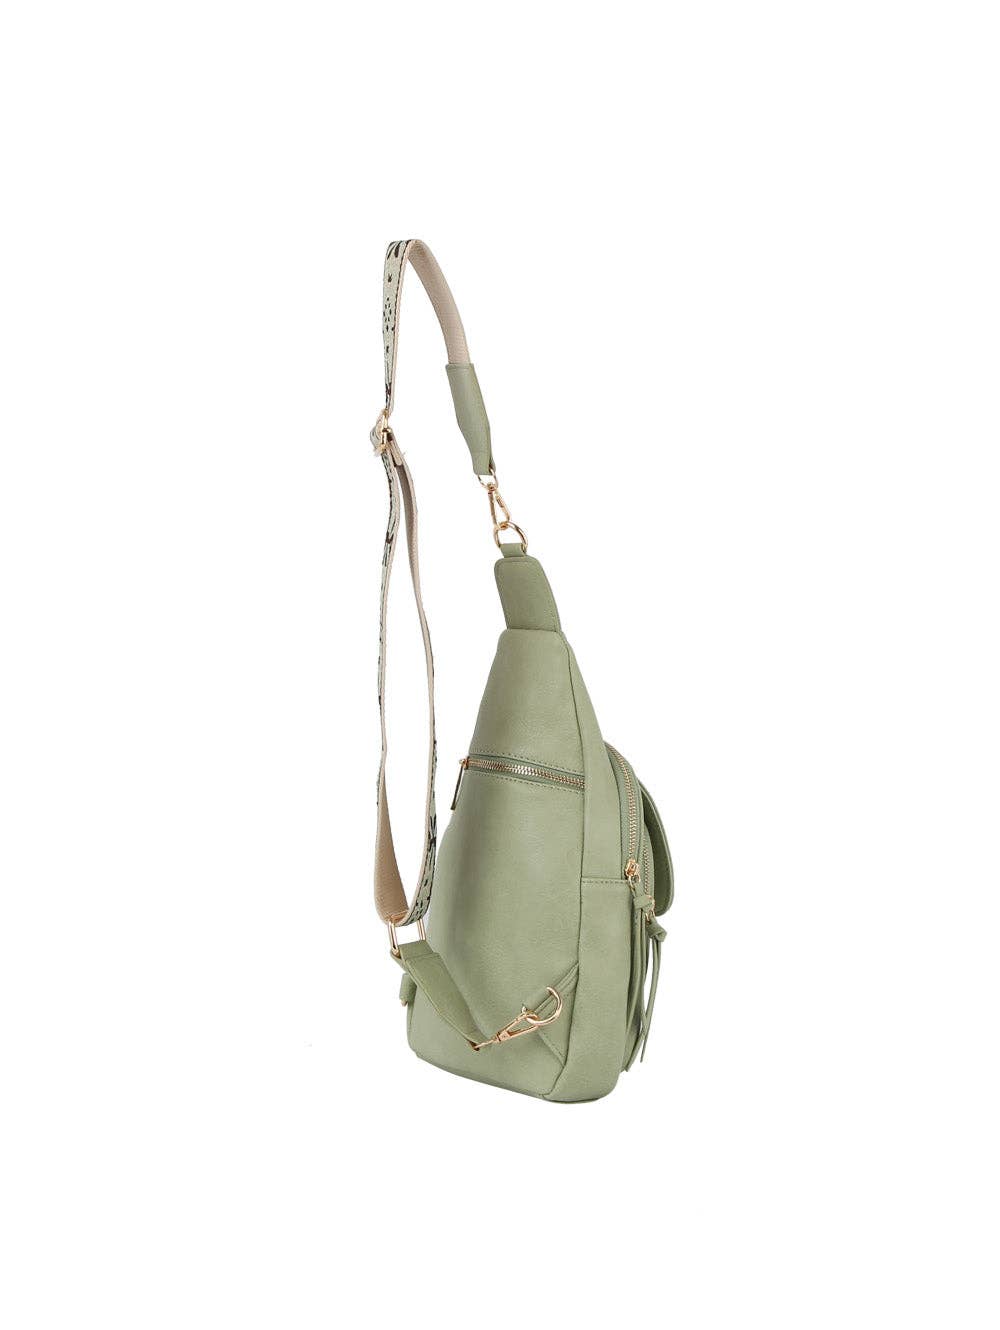 Flap front double zip sling backpack - Premium handbag from Handbag Factory Corp - Just $37.95! Shop now at Pat's Monograms